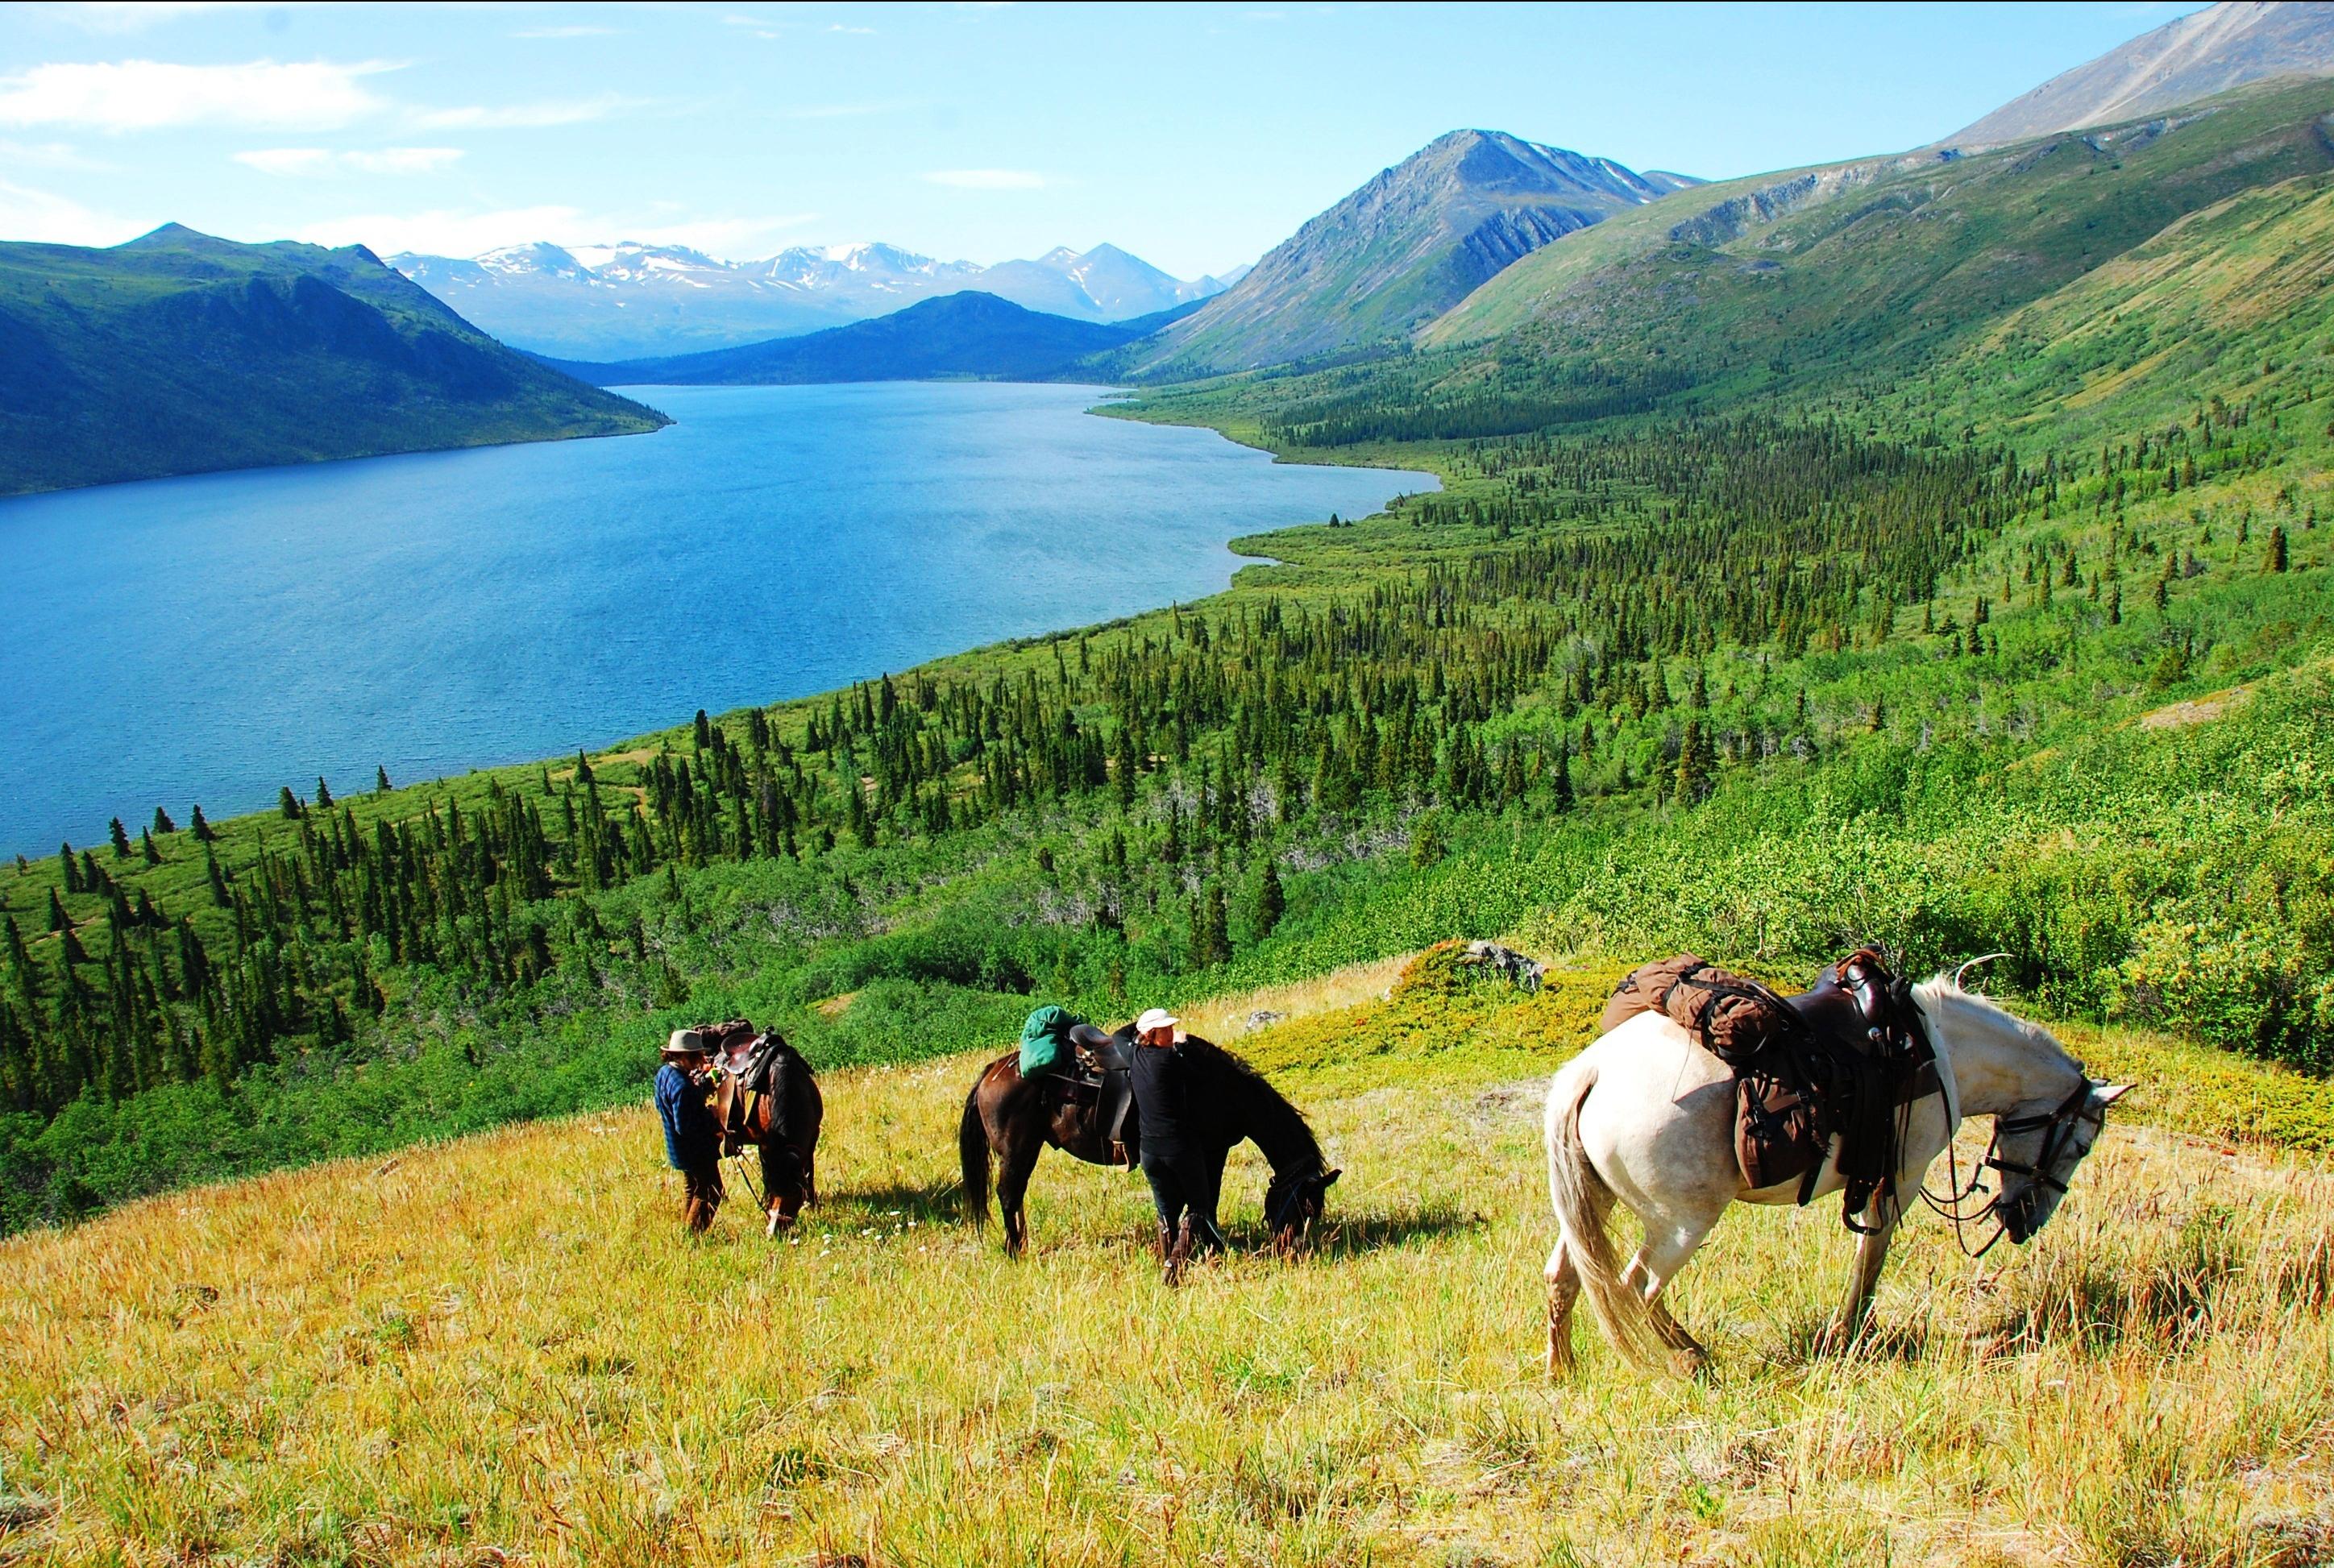 Vakantie te paard in Canada met Trailfinders Ruitervakanties